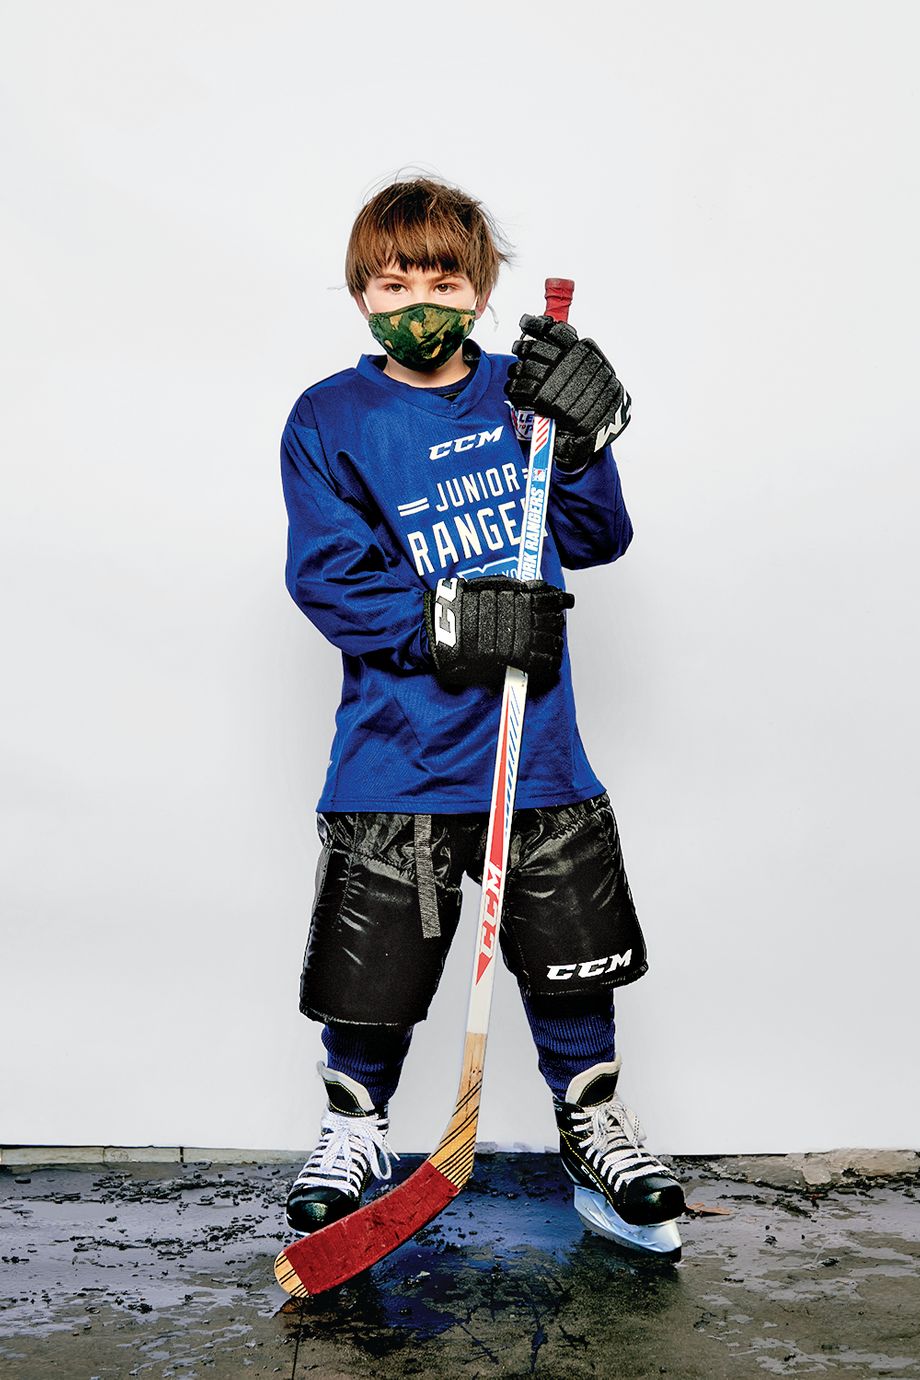 Photos: Junior Rangers Hockey Practice at Prospect Park